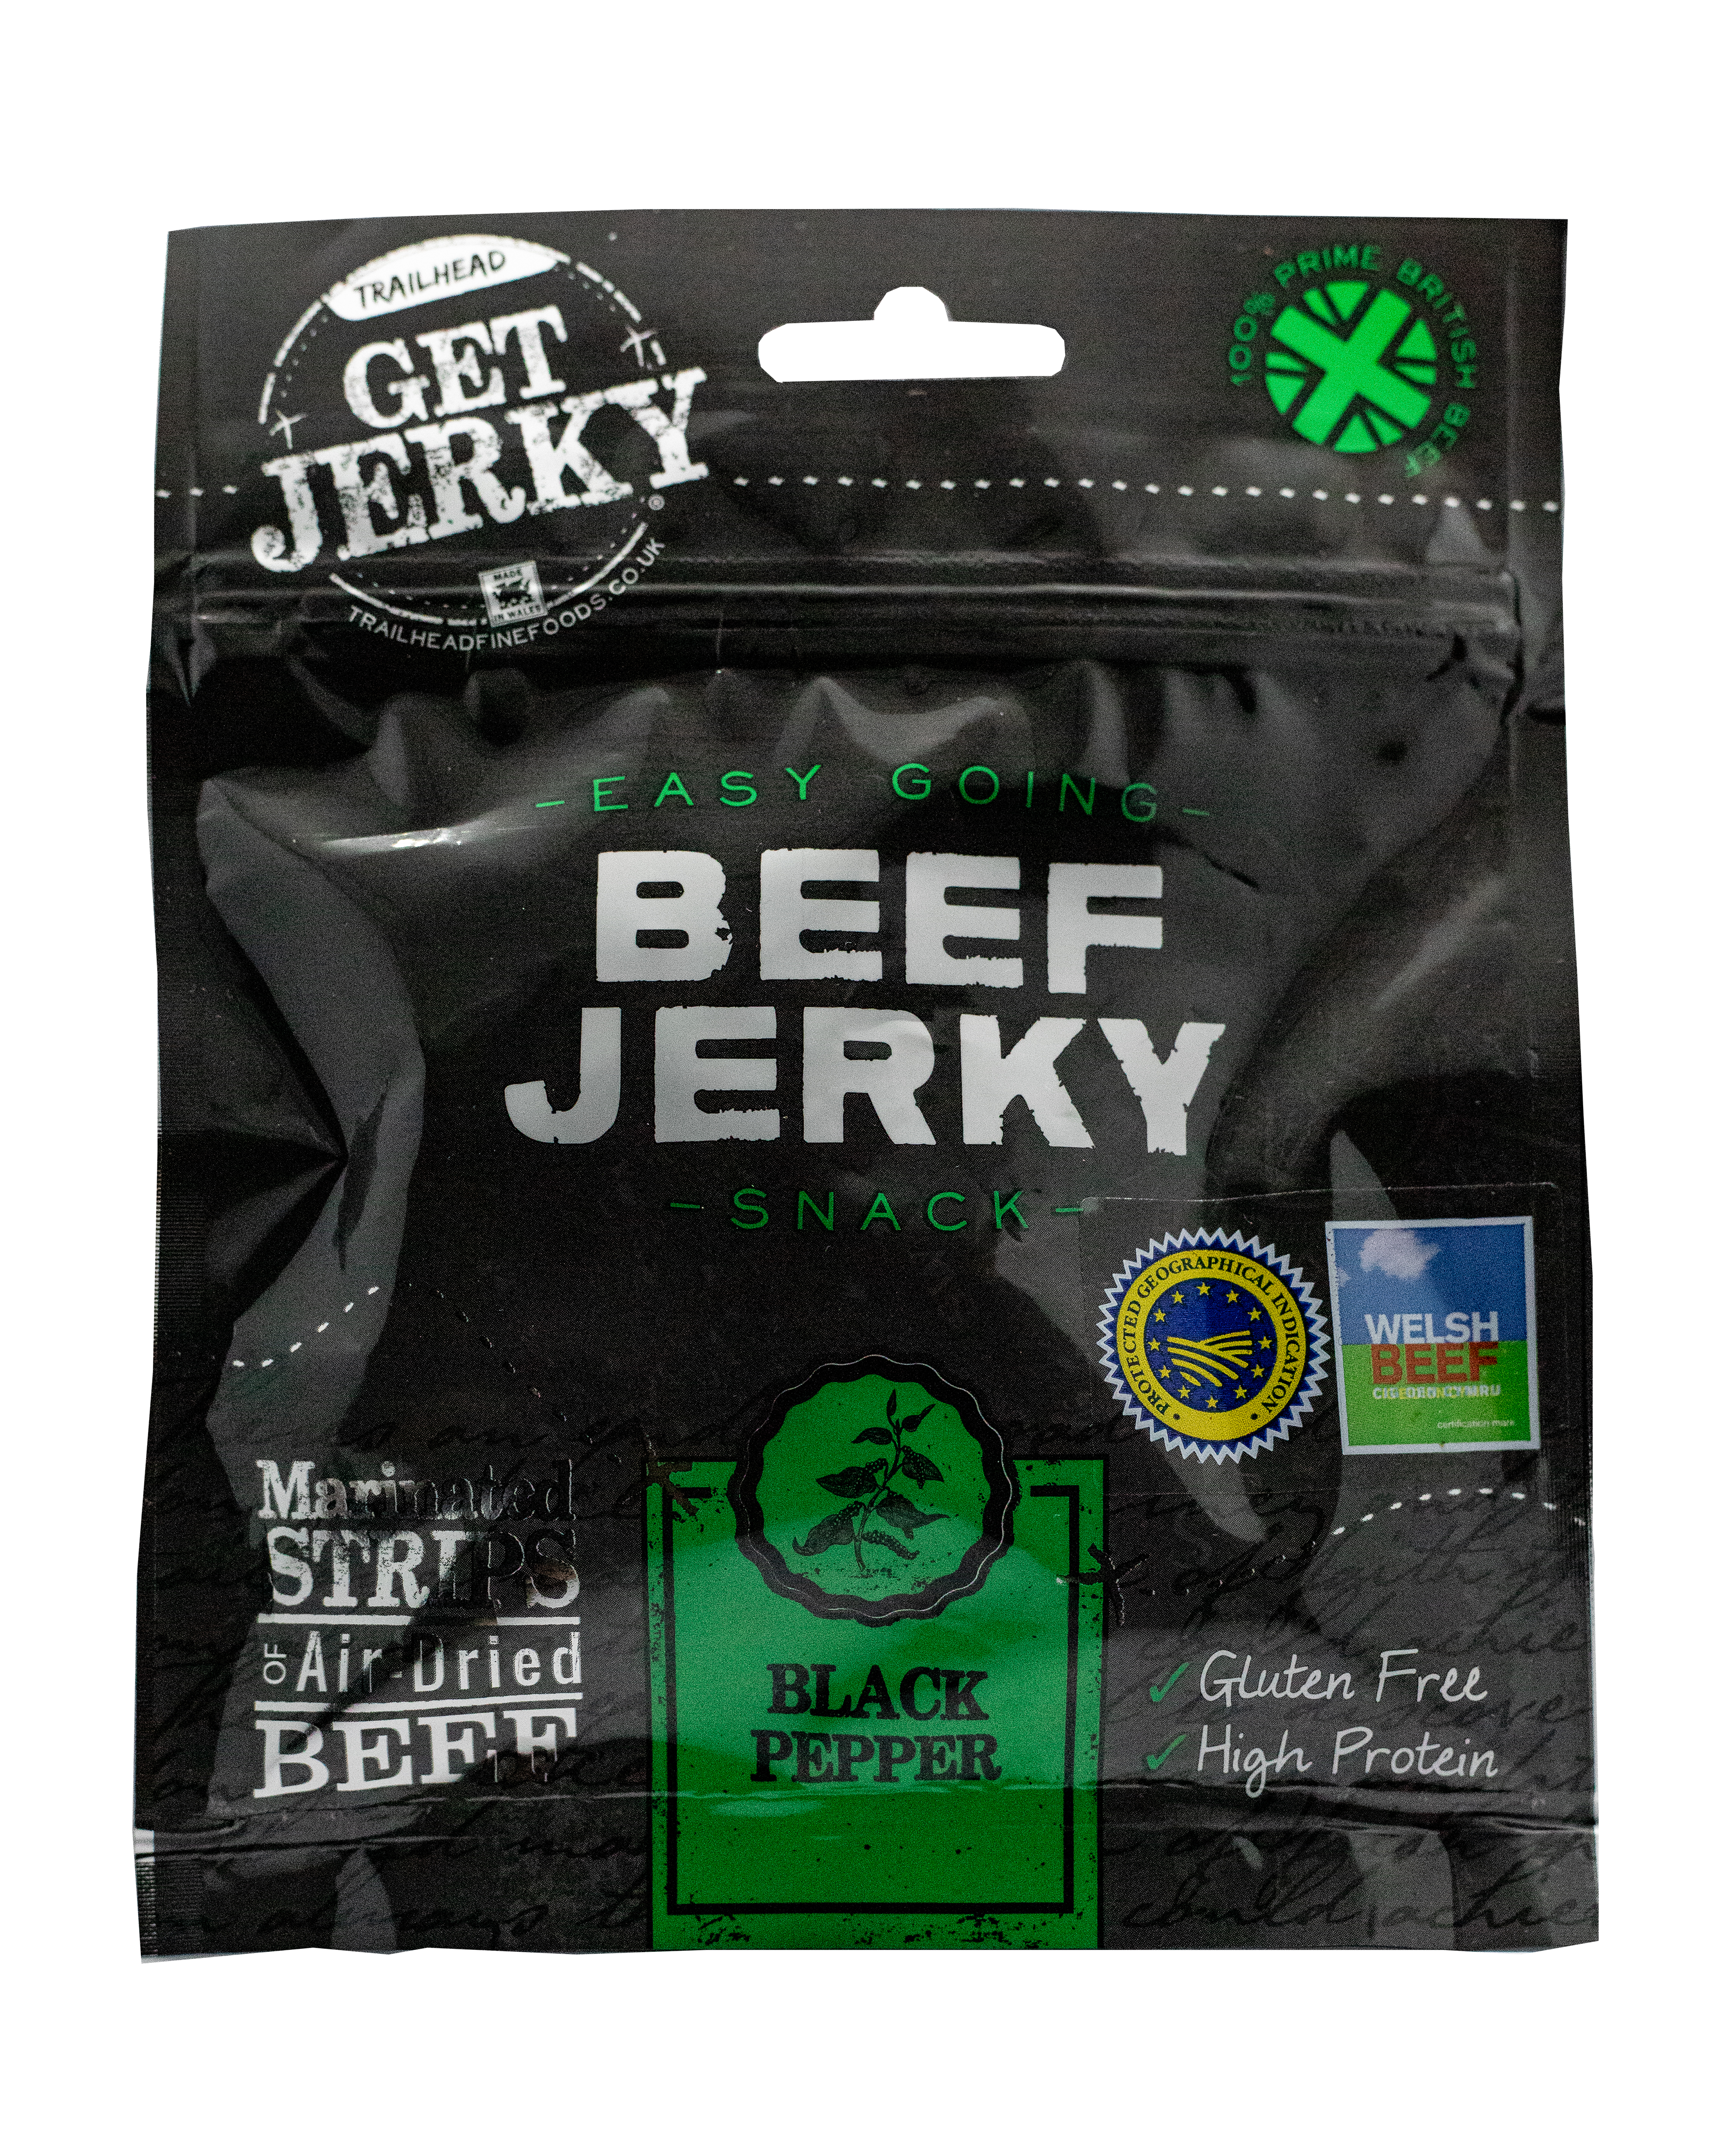 get jerky original